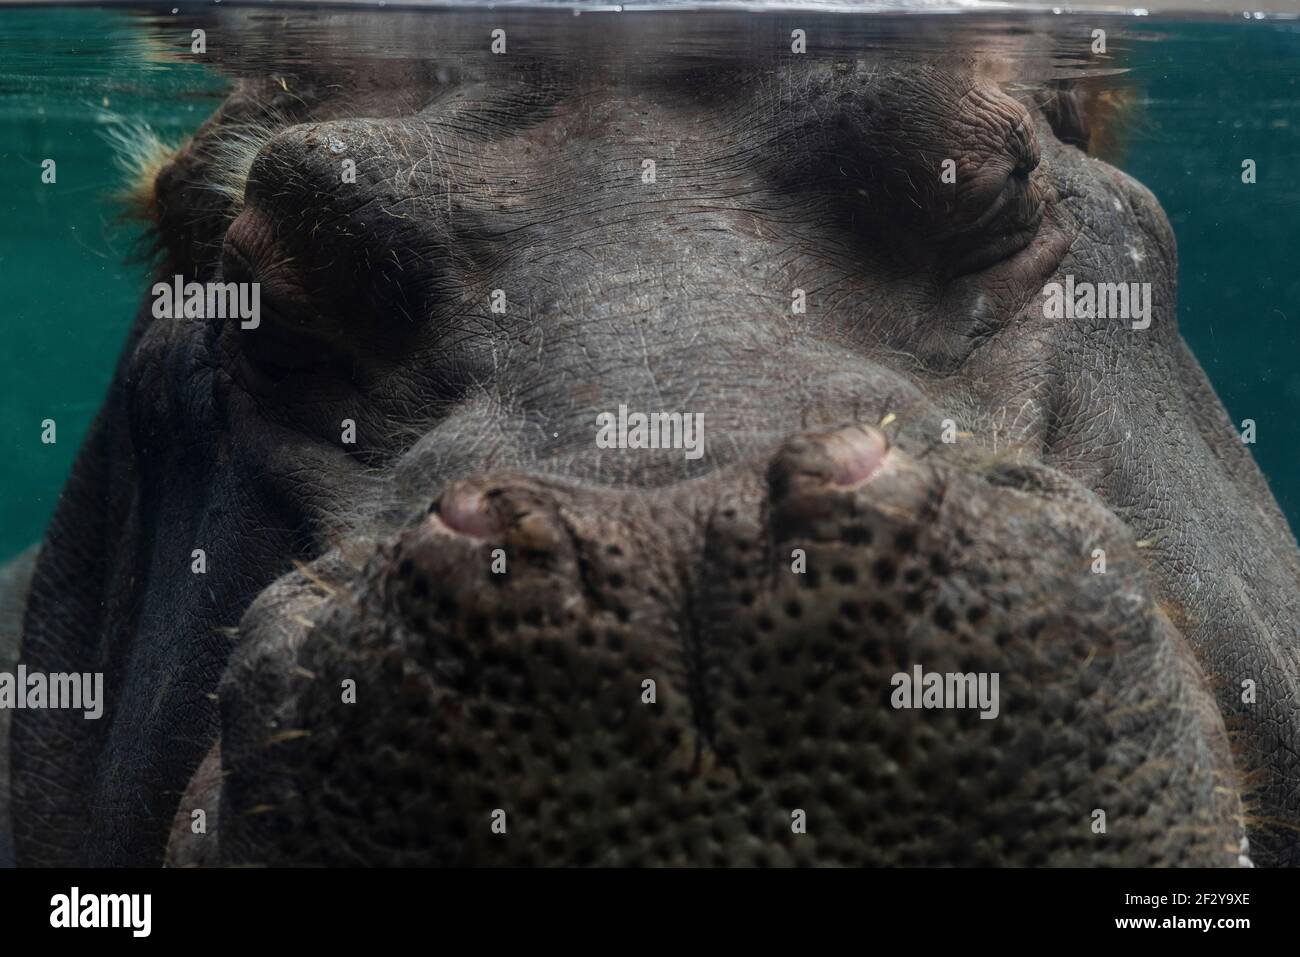 A hippopotamus takes a nap underwater on March 9, 2021, at the Saint Louis Zoo. Stock Photo